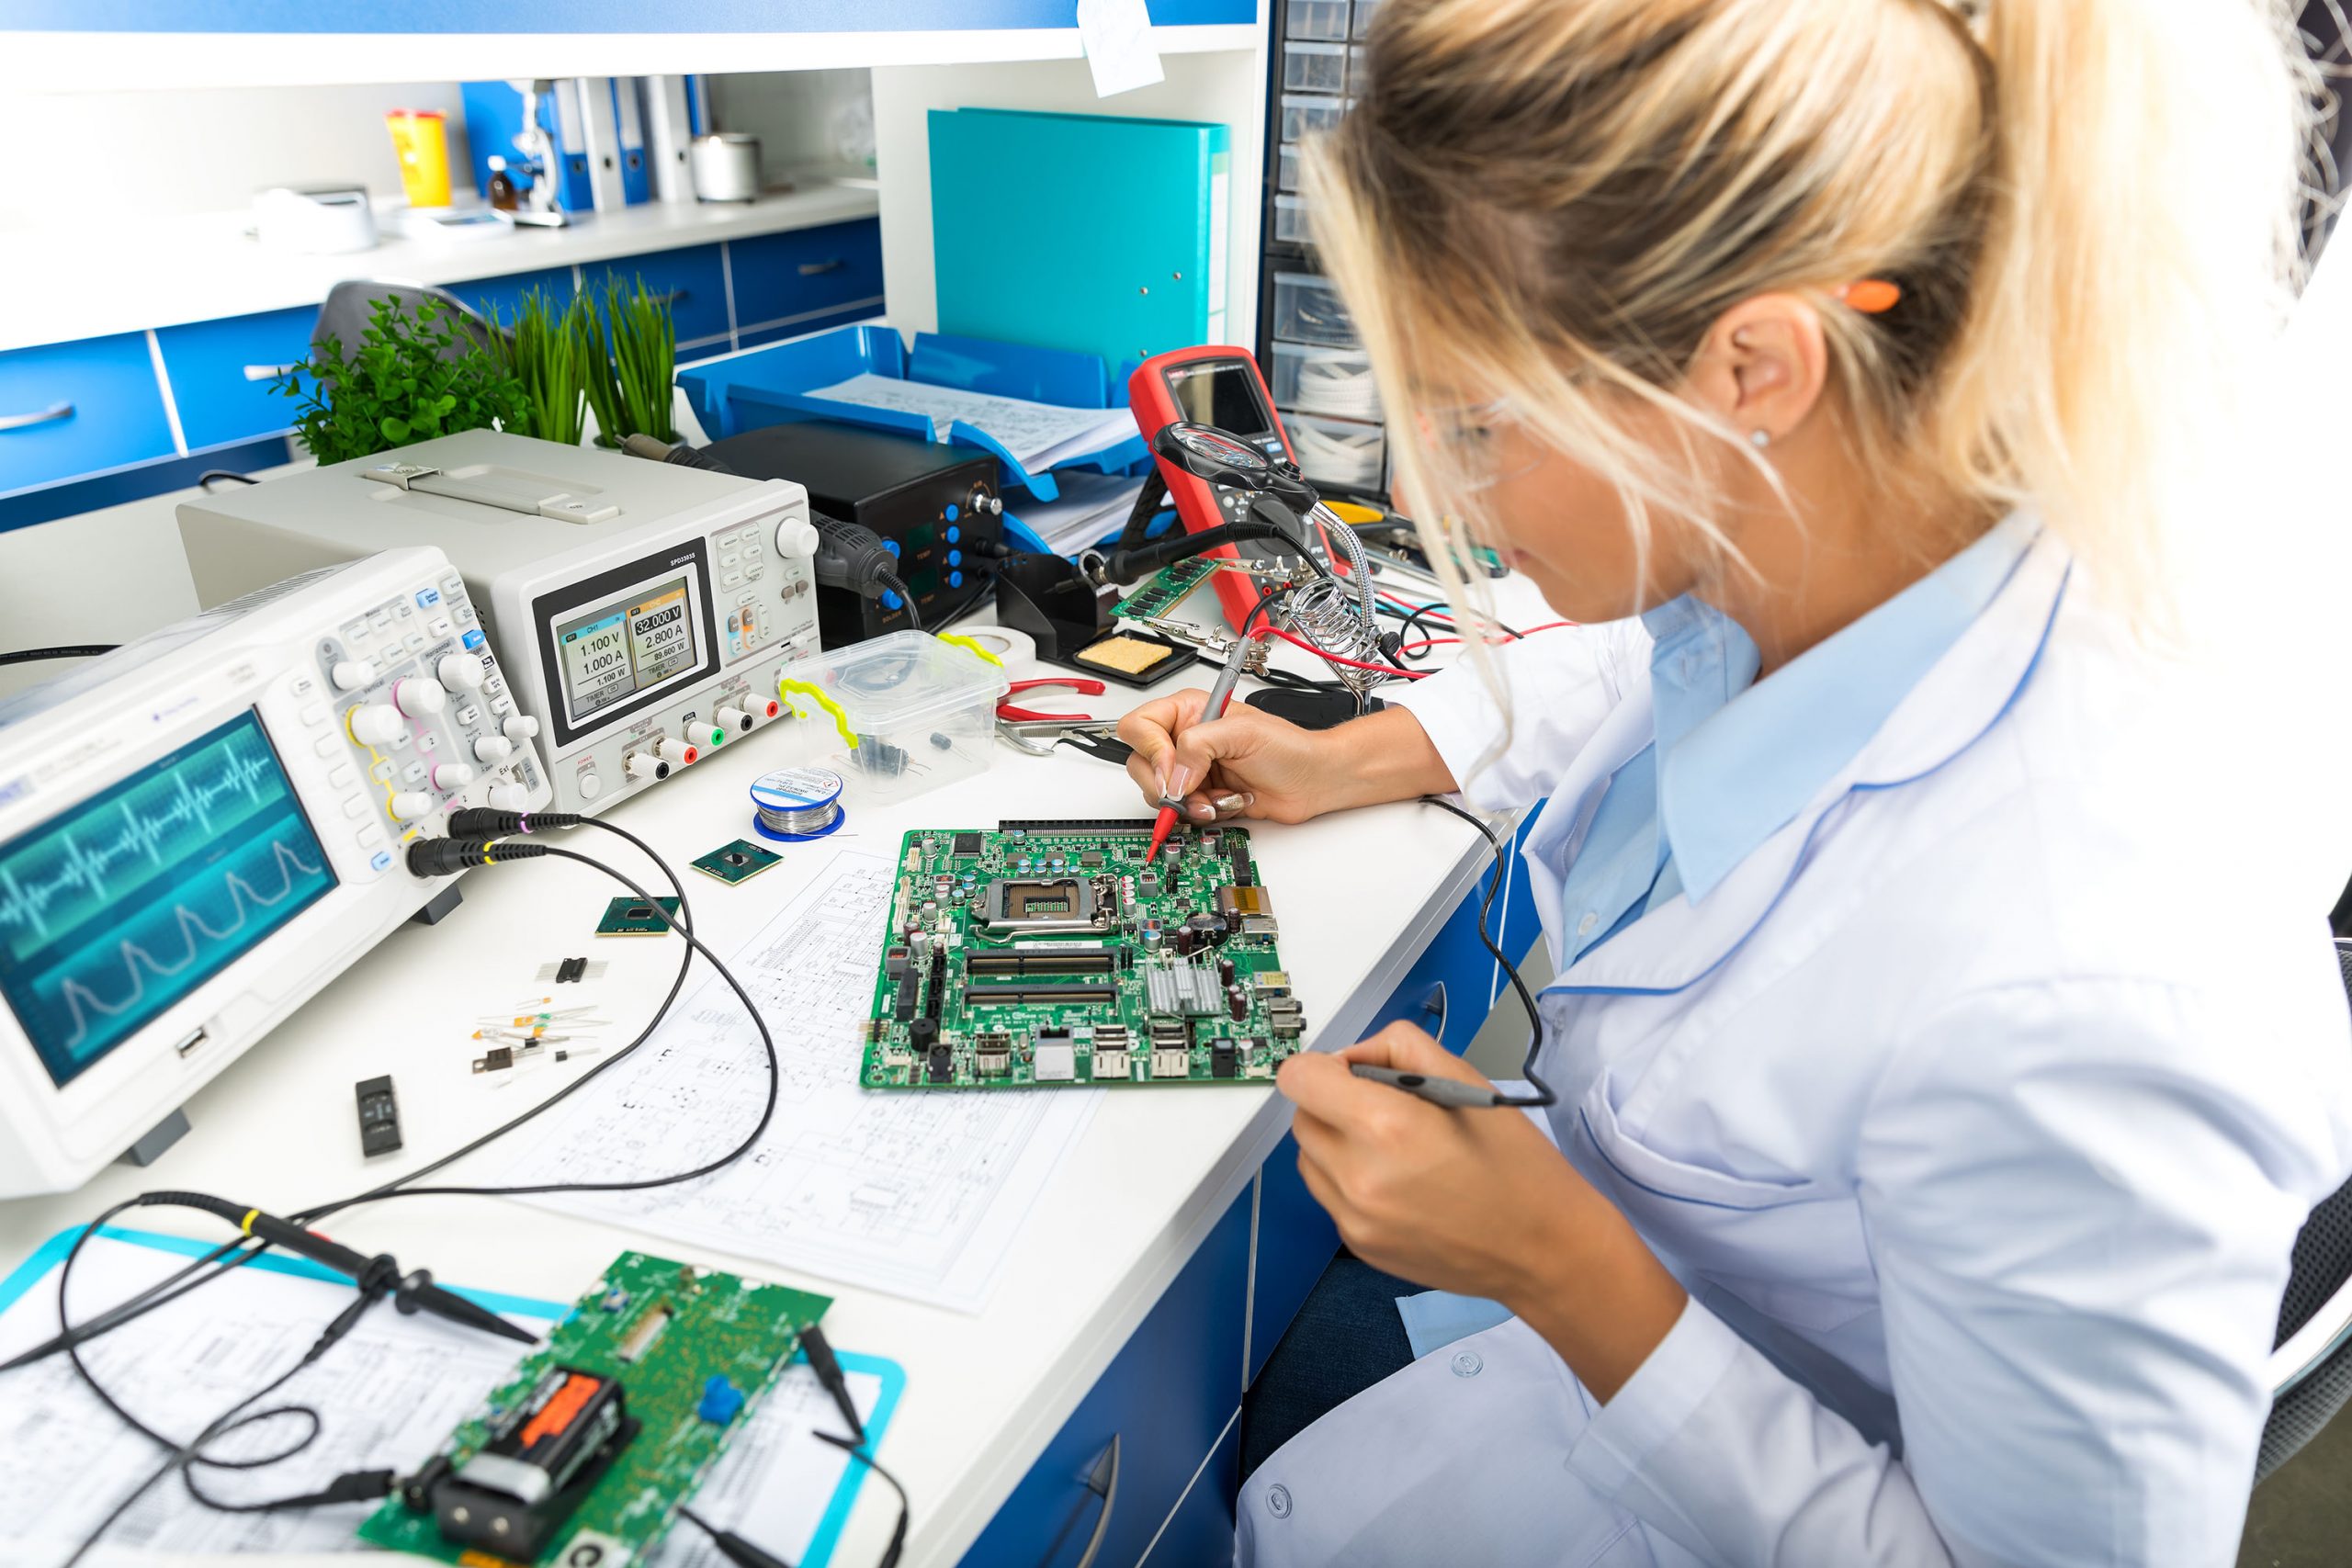 Test Equipment 101 - The Basics of Electronic Testing - Circuit Basics